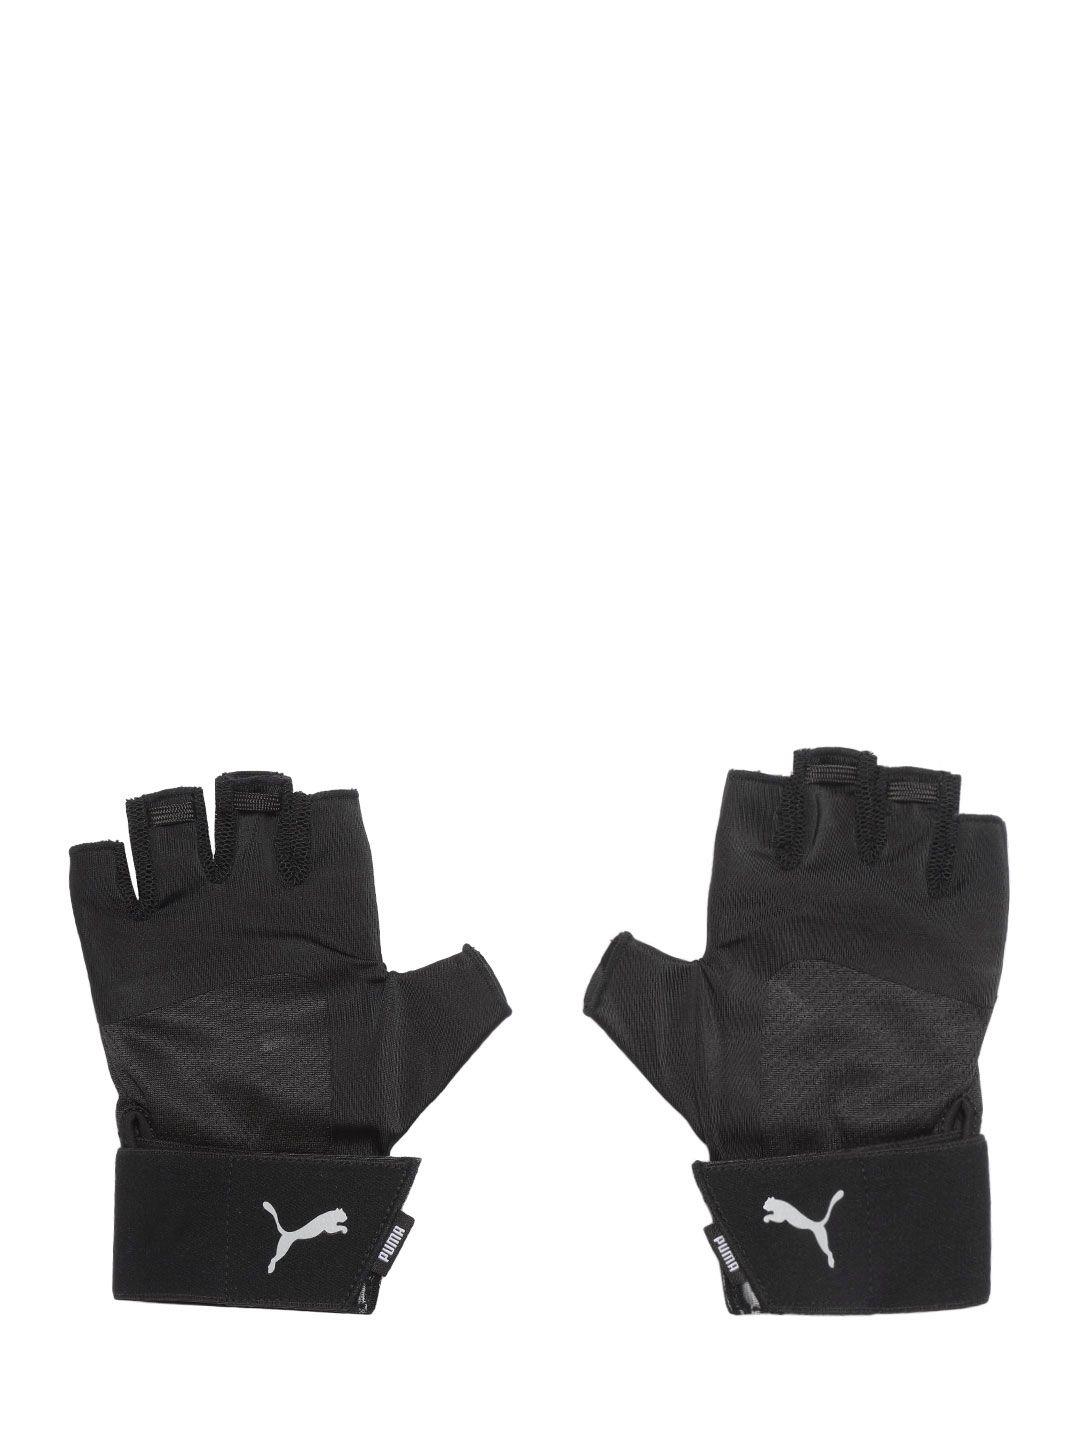 puma unisex 1black solid training essential premium gloves with wrist strap